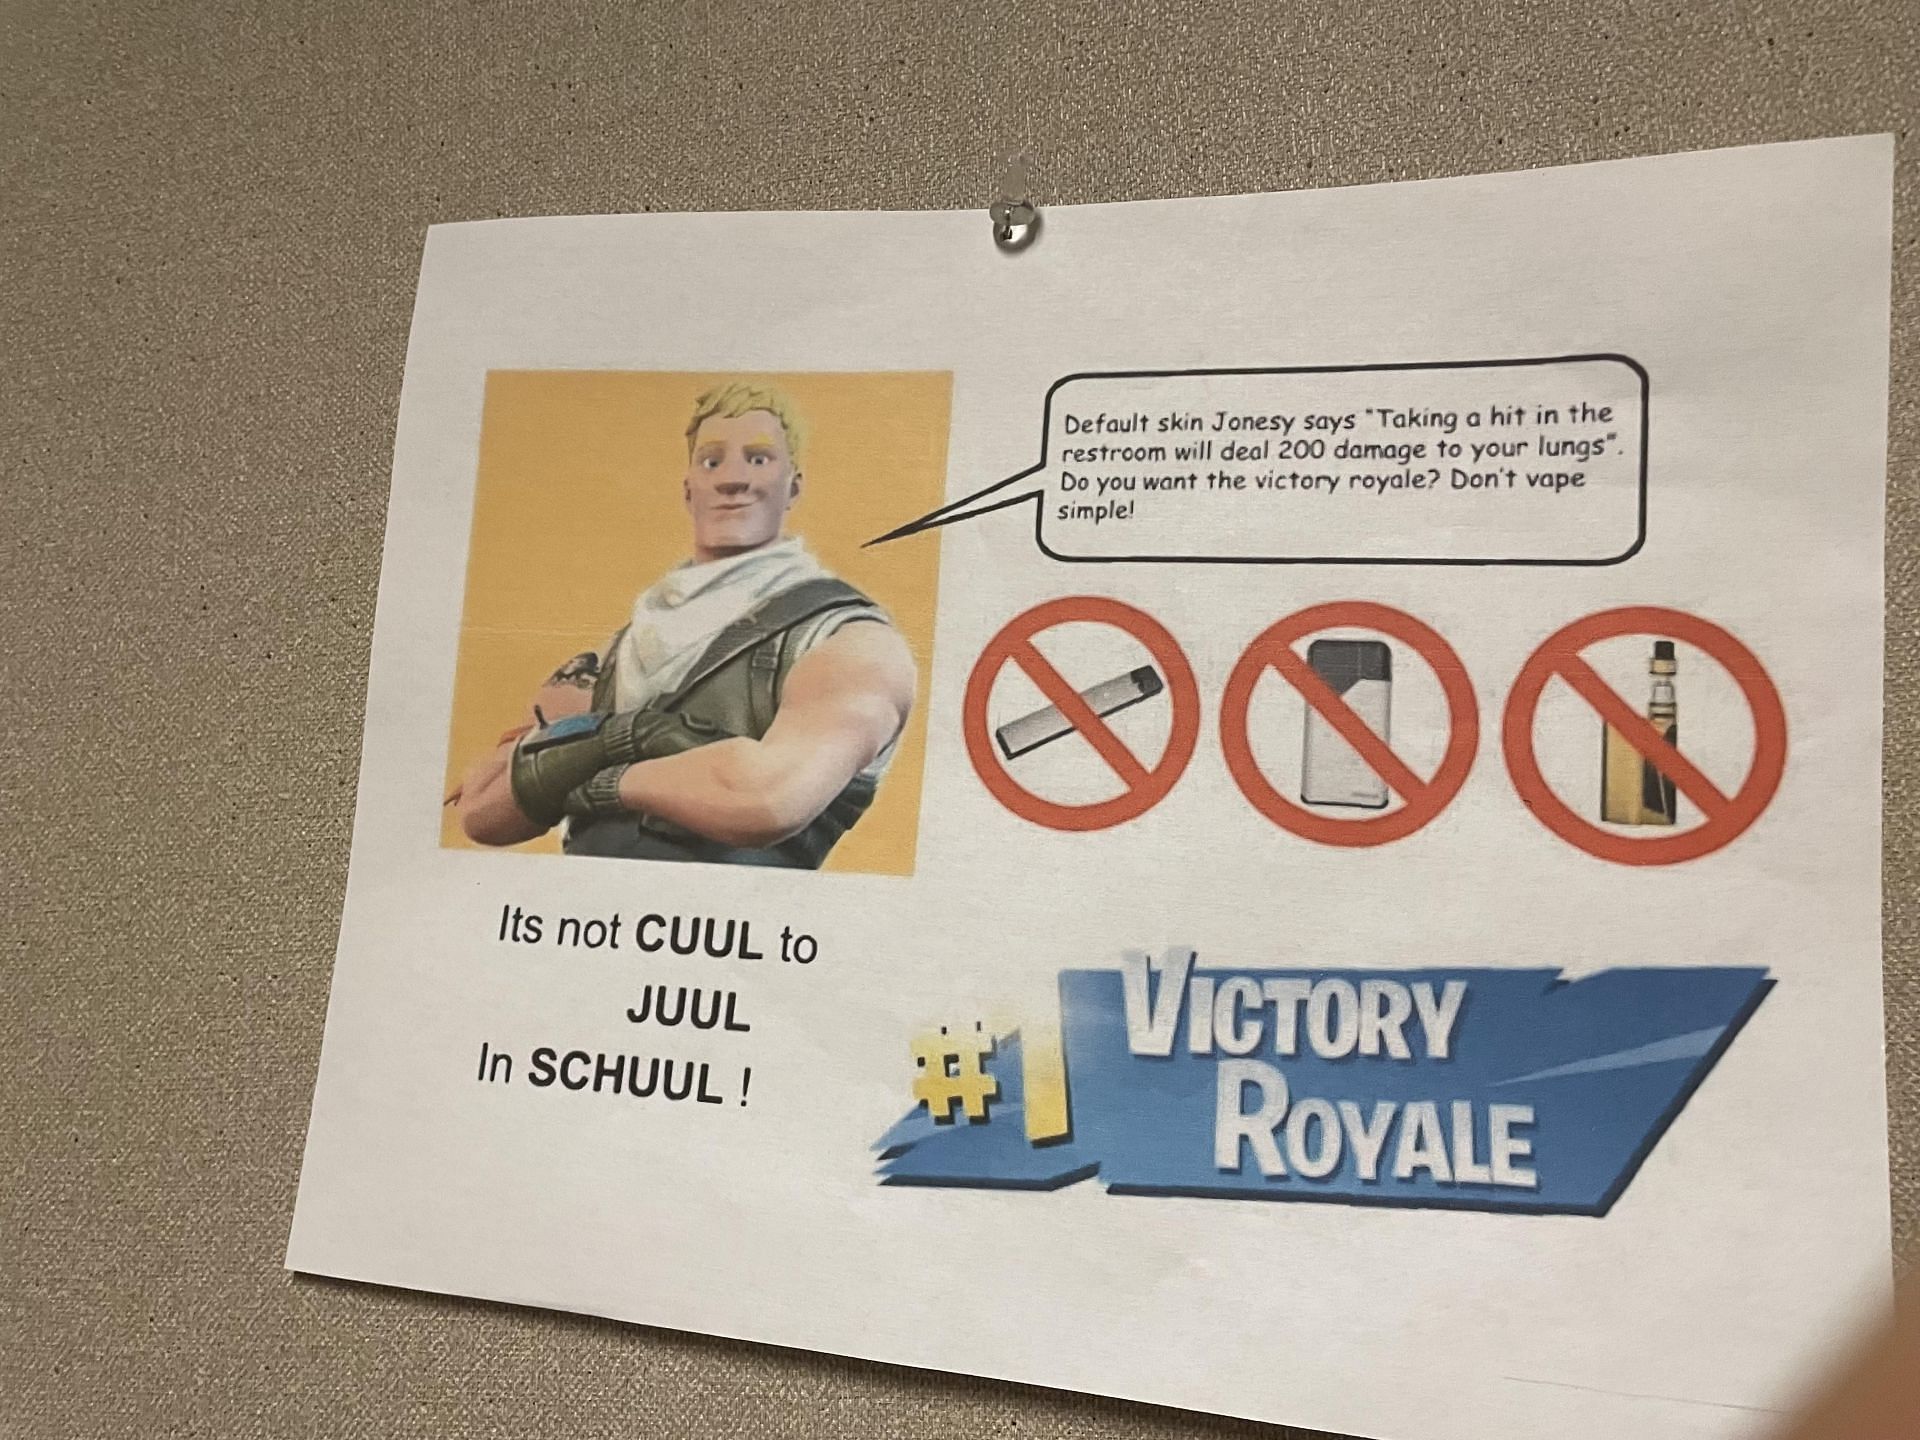 A poster of Jonsey found in school (Image via Reddit)